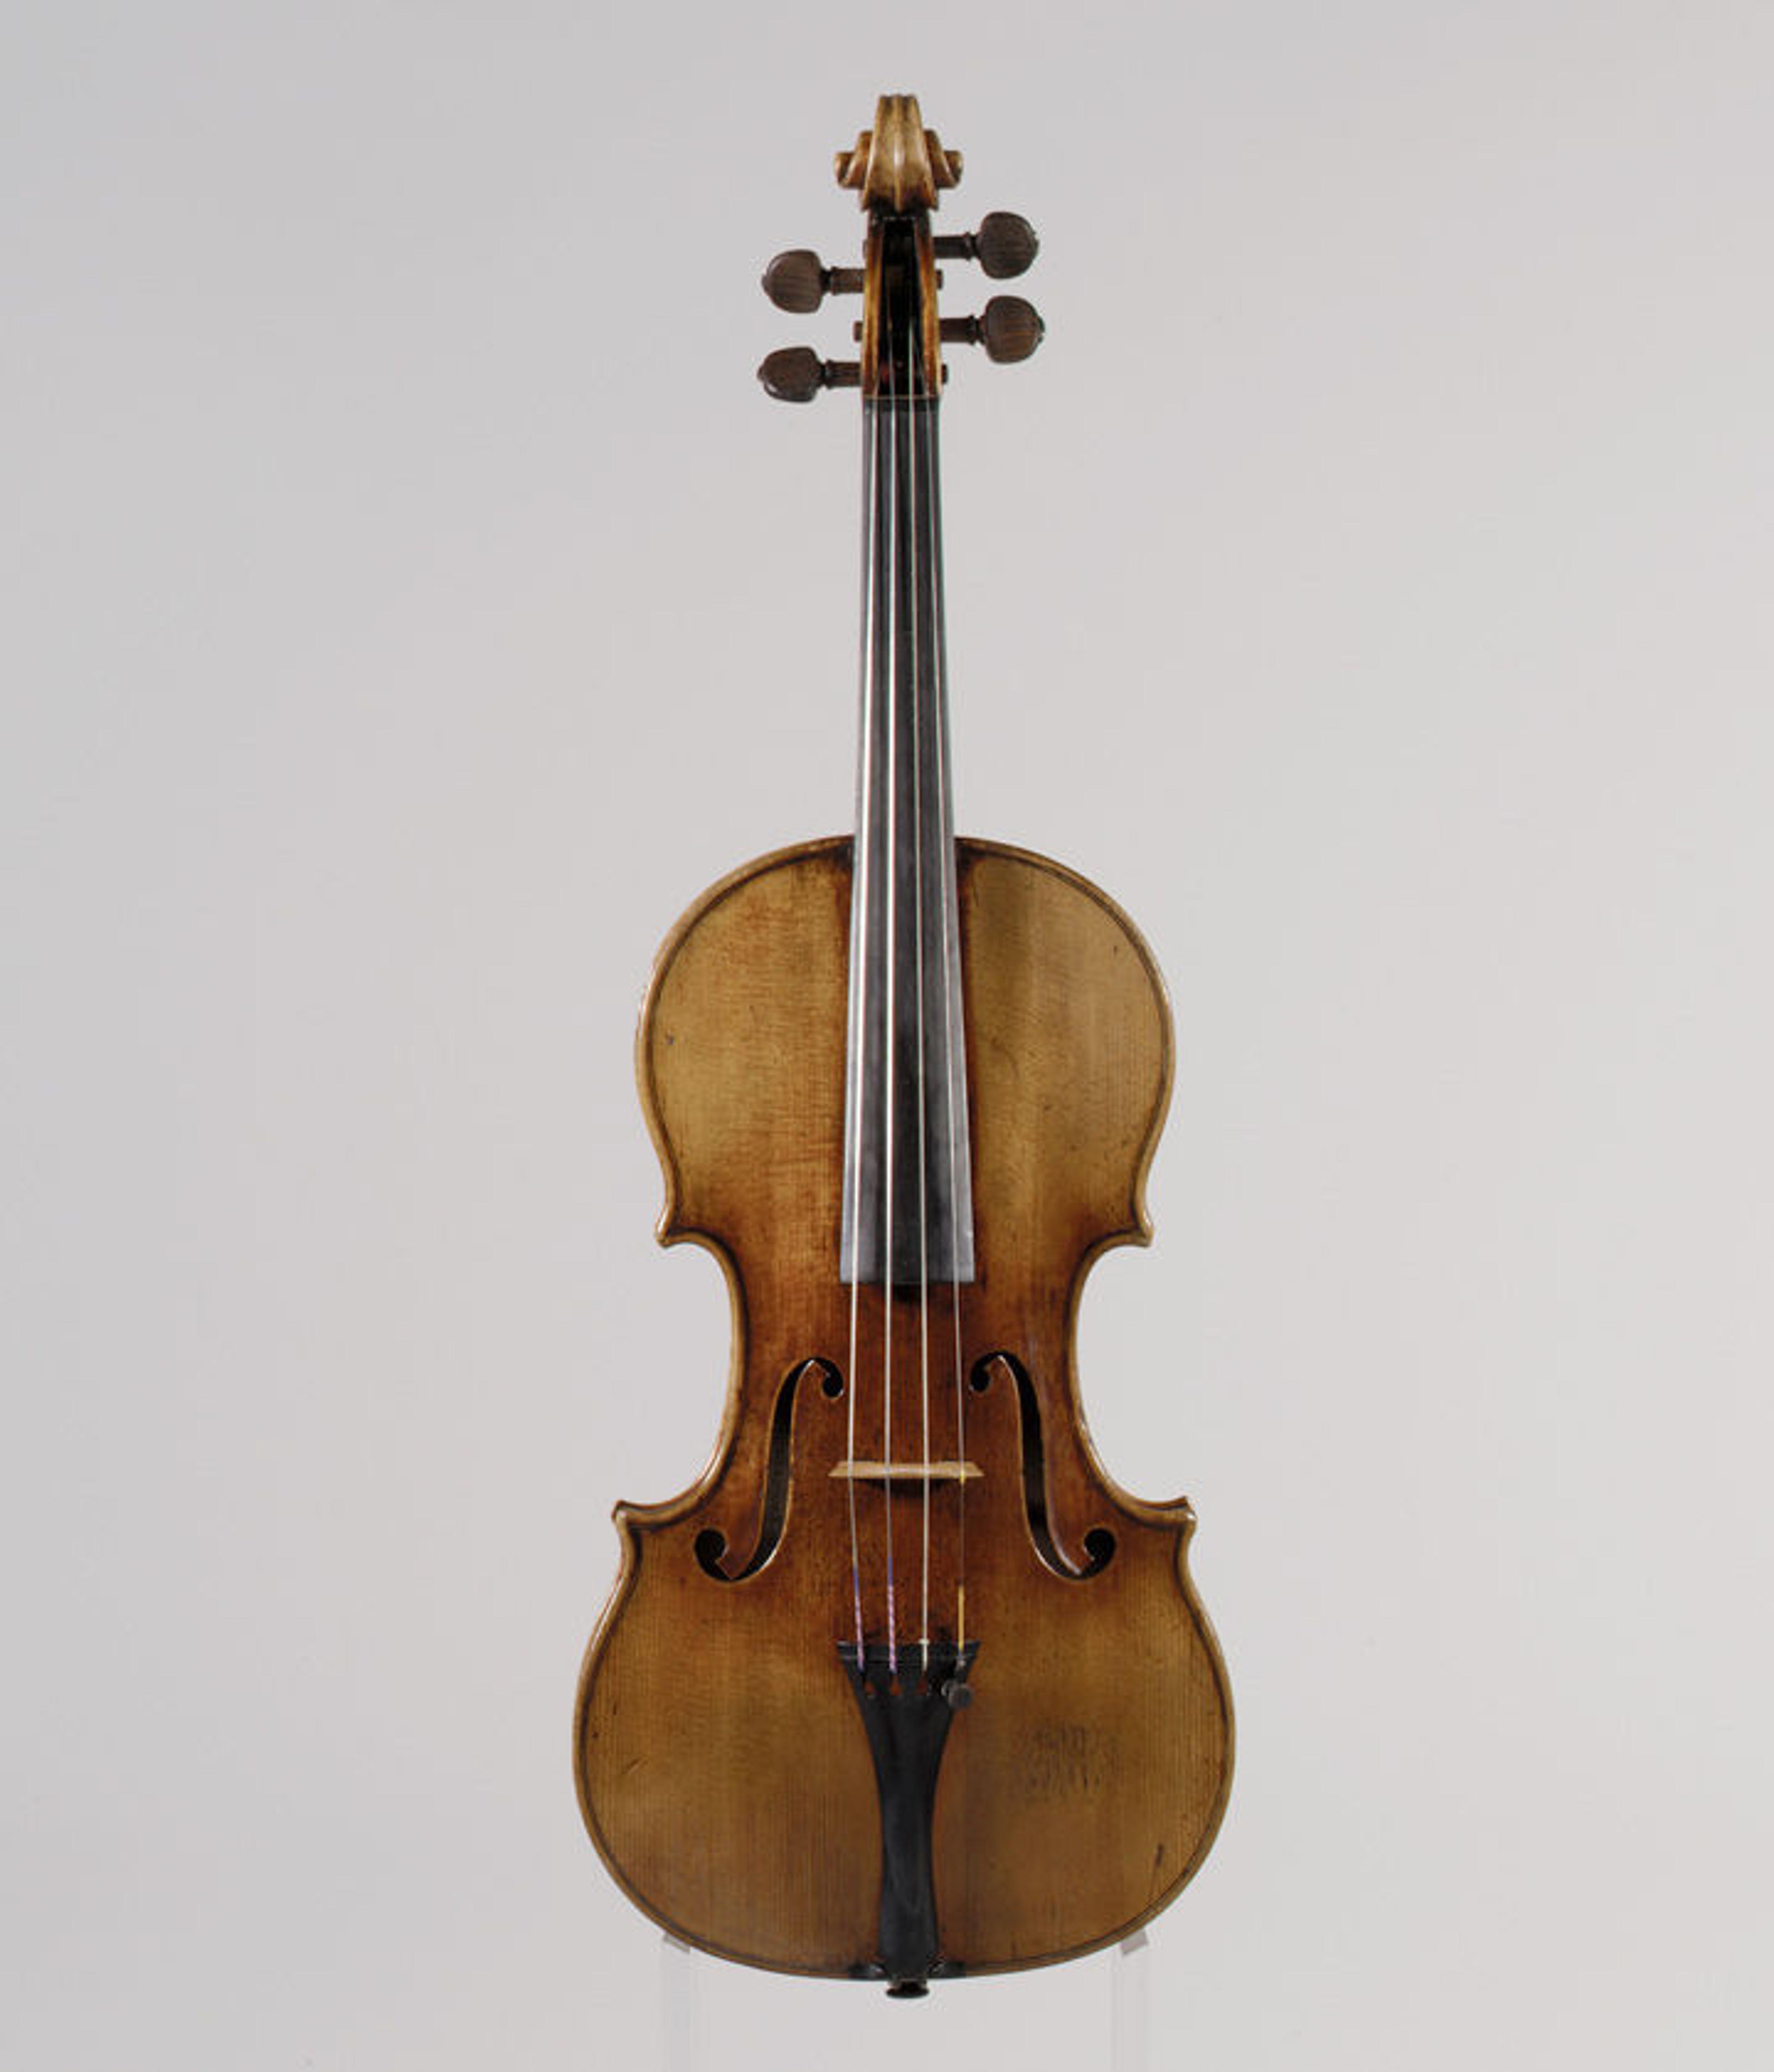 A violin made by Antonio Stradivari